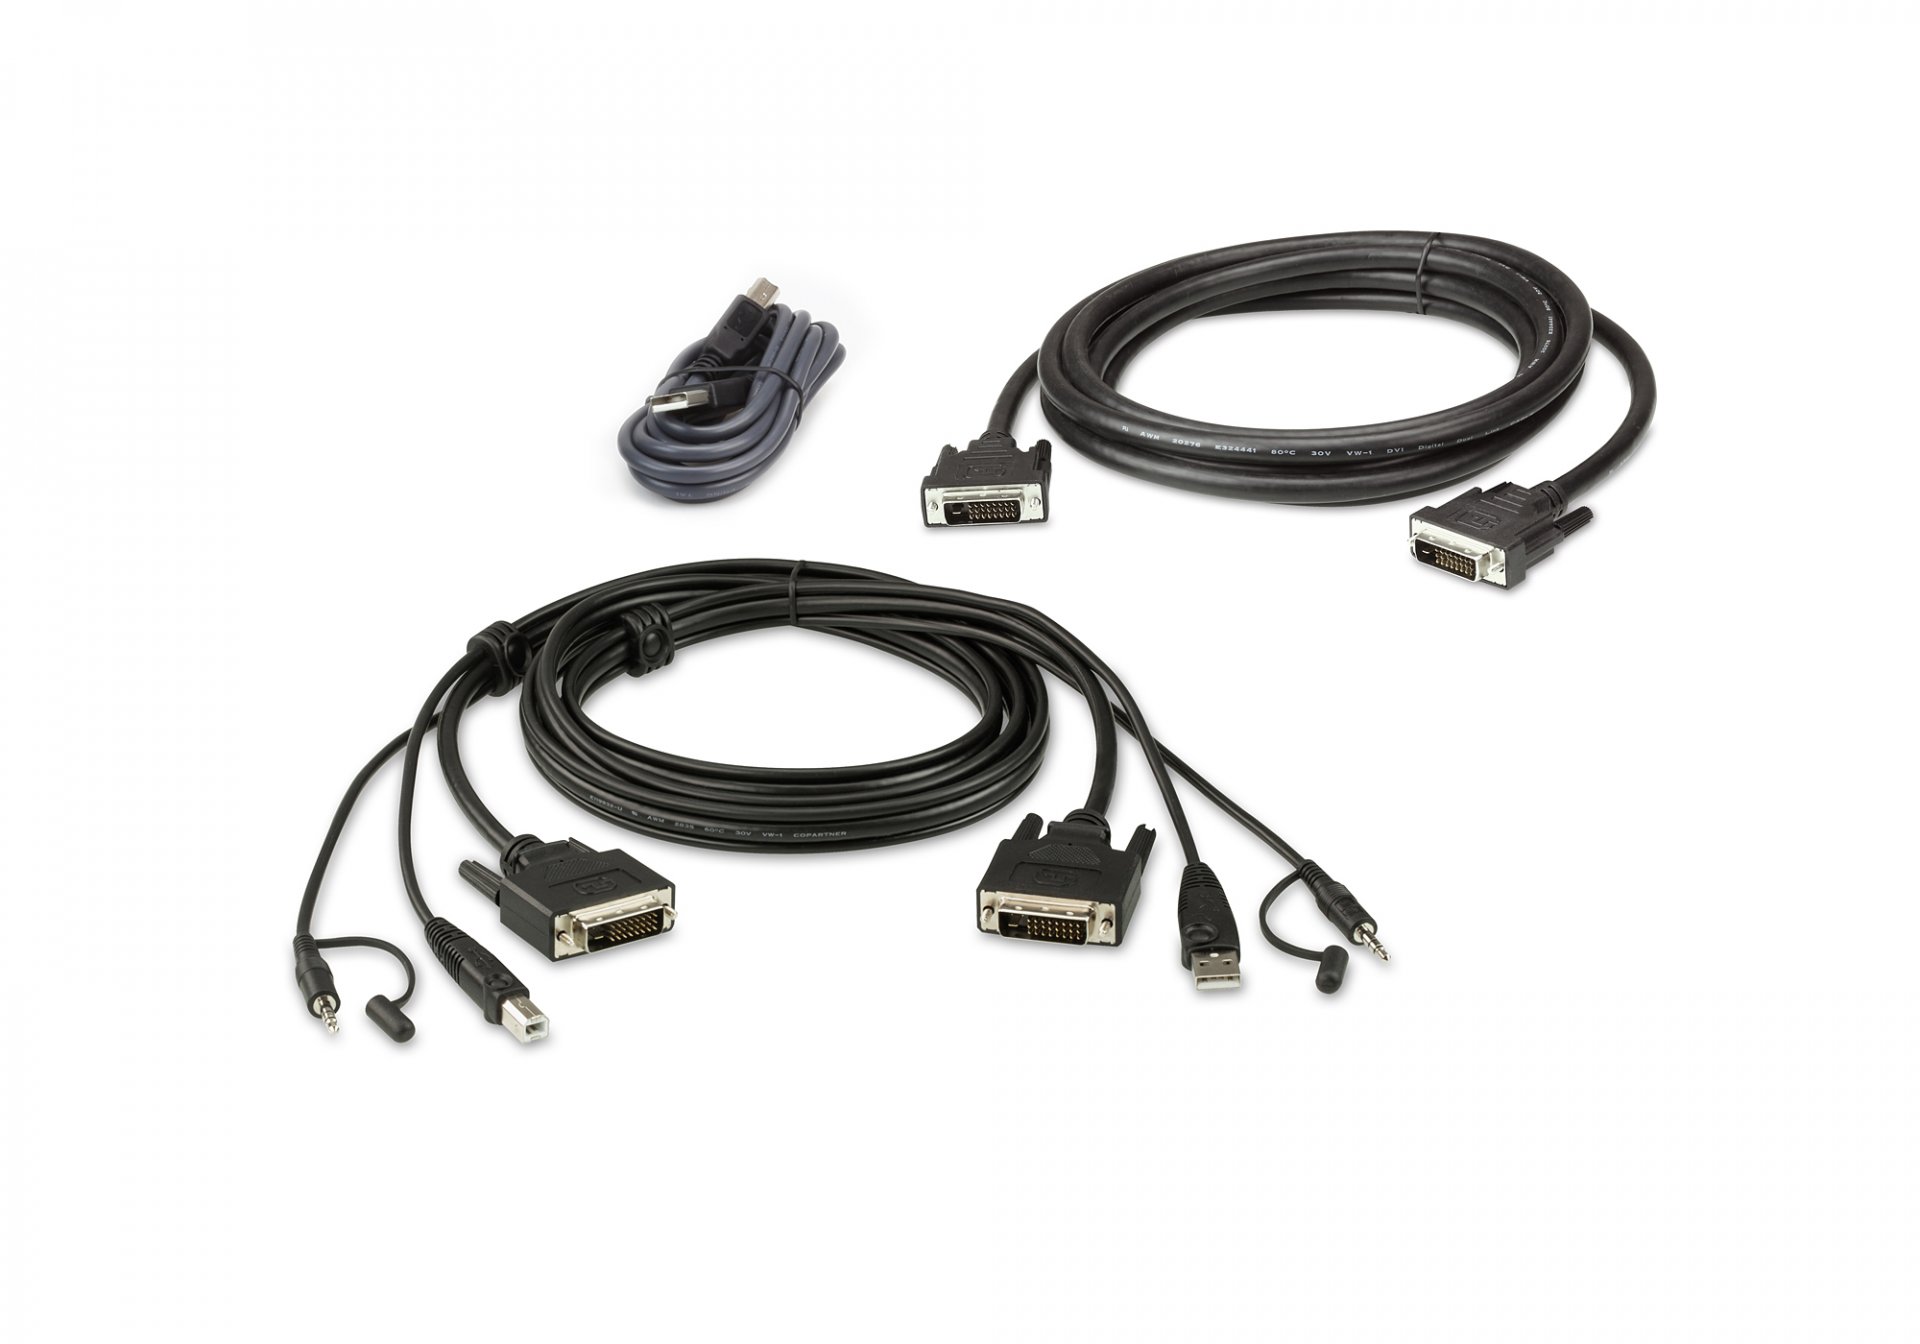 2L-7D03UDX5 : 3M USB DVI-D Dual Link Dual Display Secure KVM Cable Kit